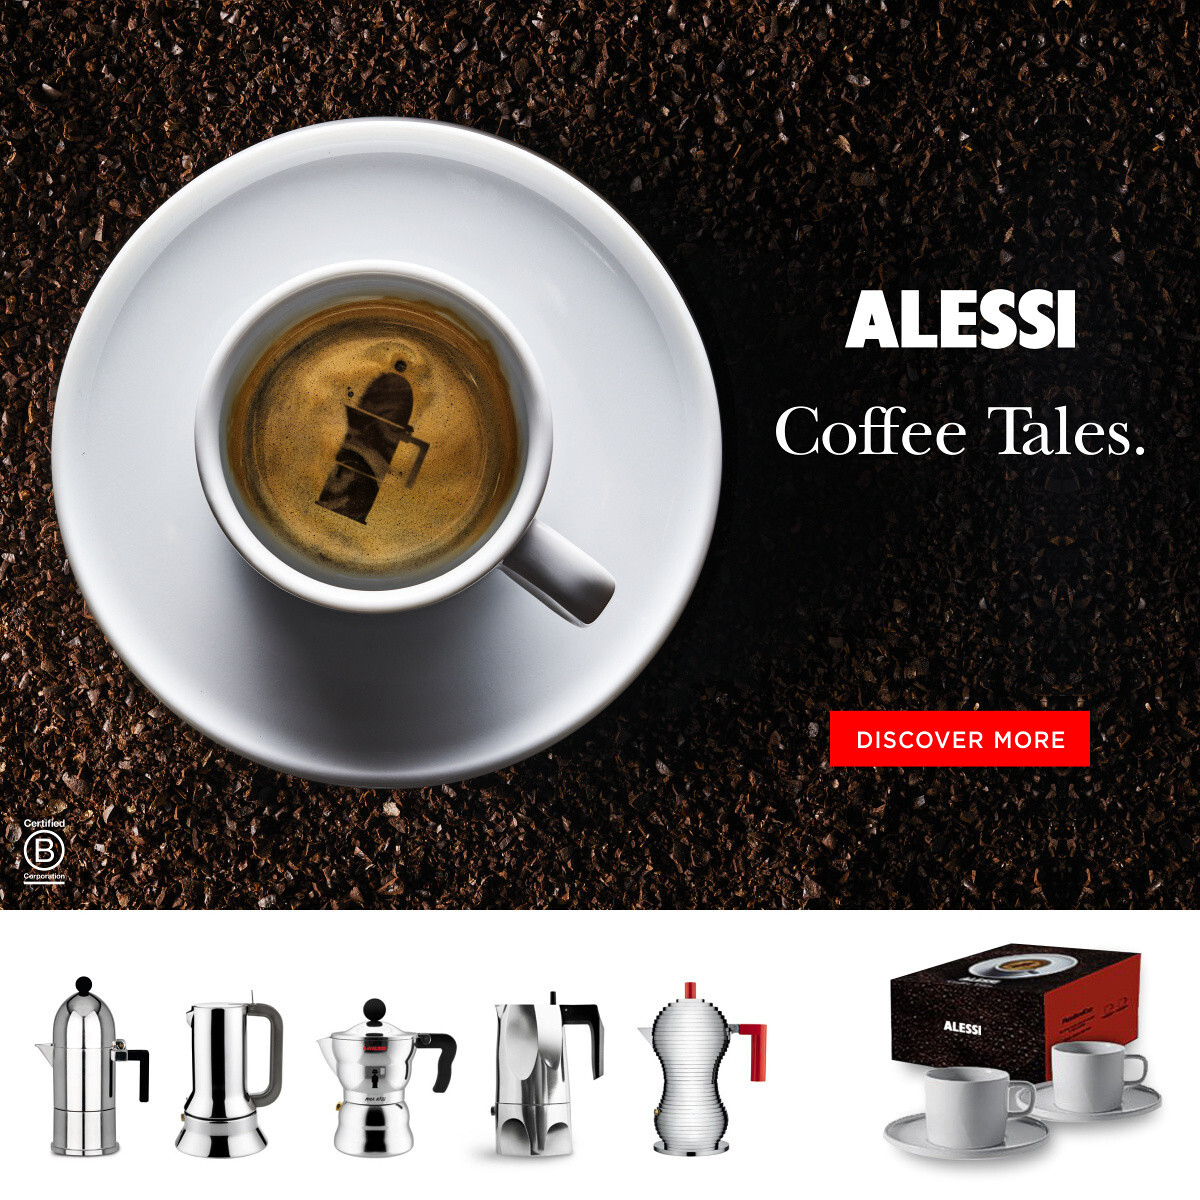 ALESSI "Coffee Tales"